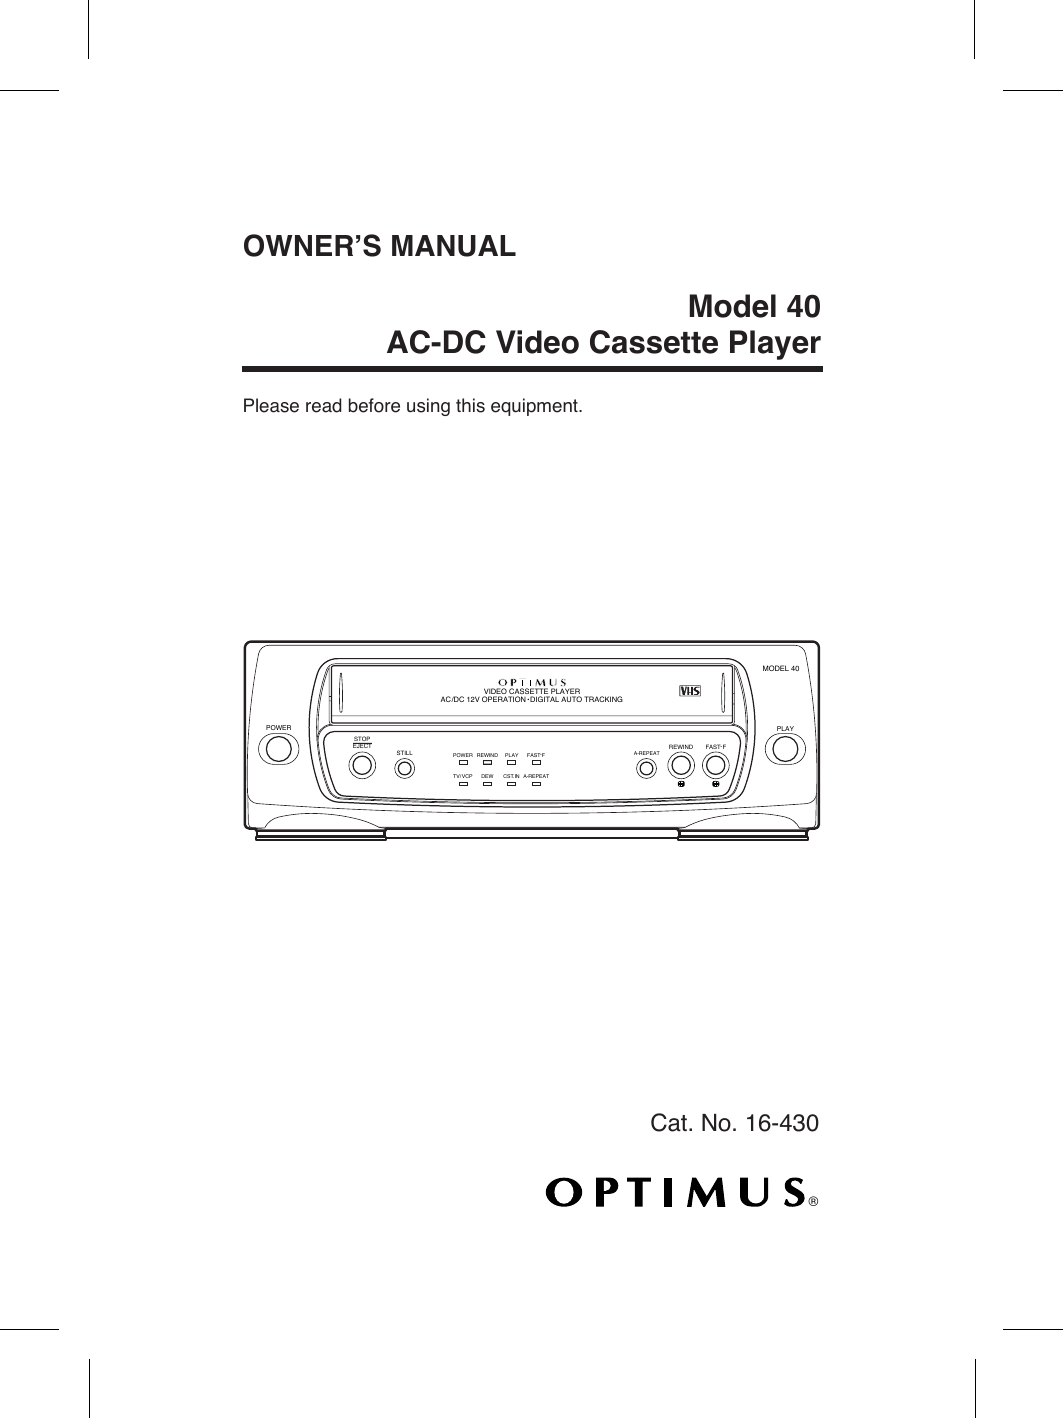 OWNERÕS MANUALModel 40AC-DC Video Cassette PlayerPlease read before using this equipment.¨POWERSTOPSTILLREWINDPLAYPOWEREJECTREWIND PLAY FAST F-FAST F-REPEATA- REPEATA- CST.INDEWTV/ VCPVIDEO CASSETTE PLAYERMODEL 40AC /DC 12V OPERATION  DIGITAL AUTO TRACKINGCat. No. 16-430